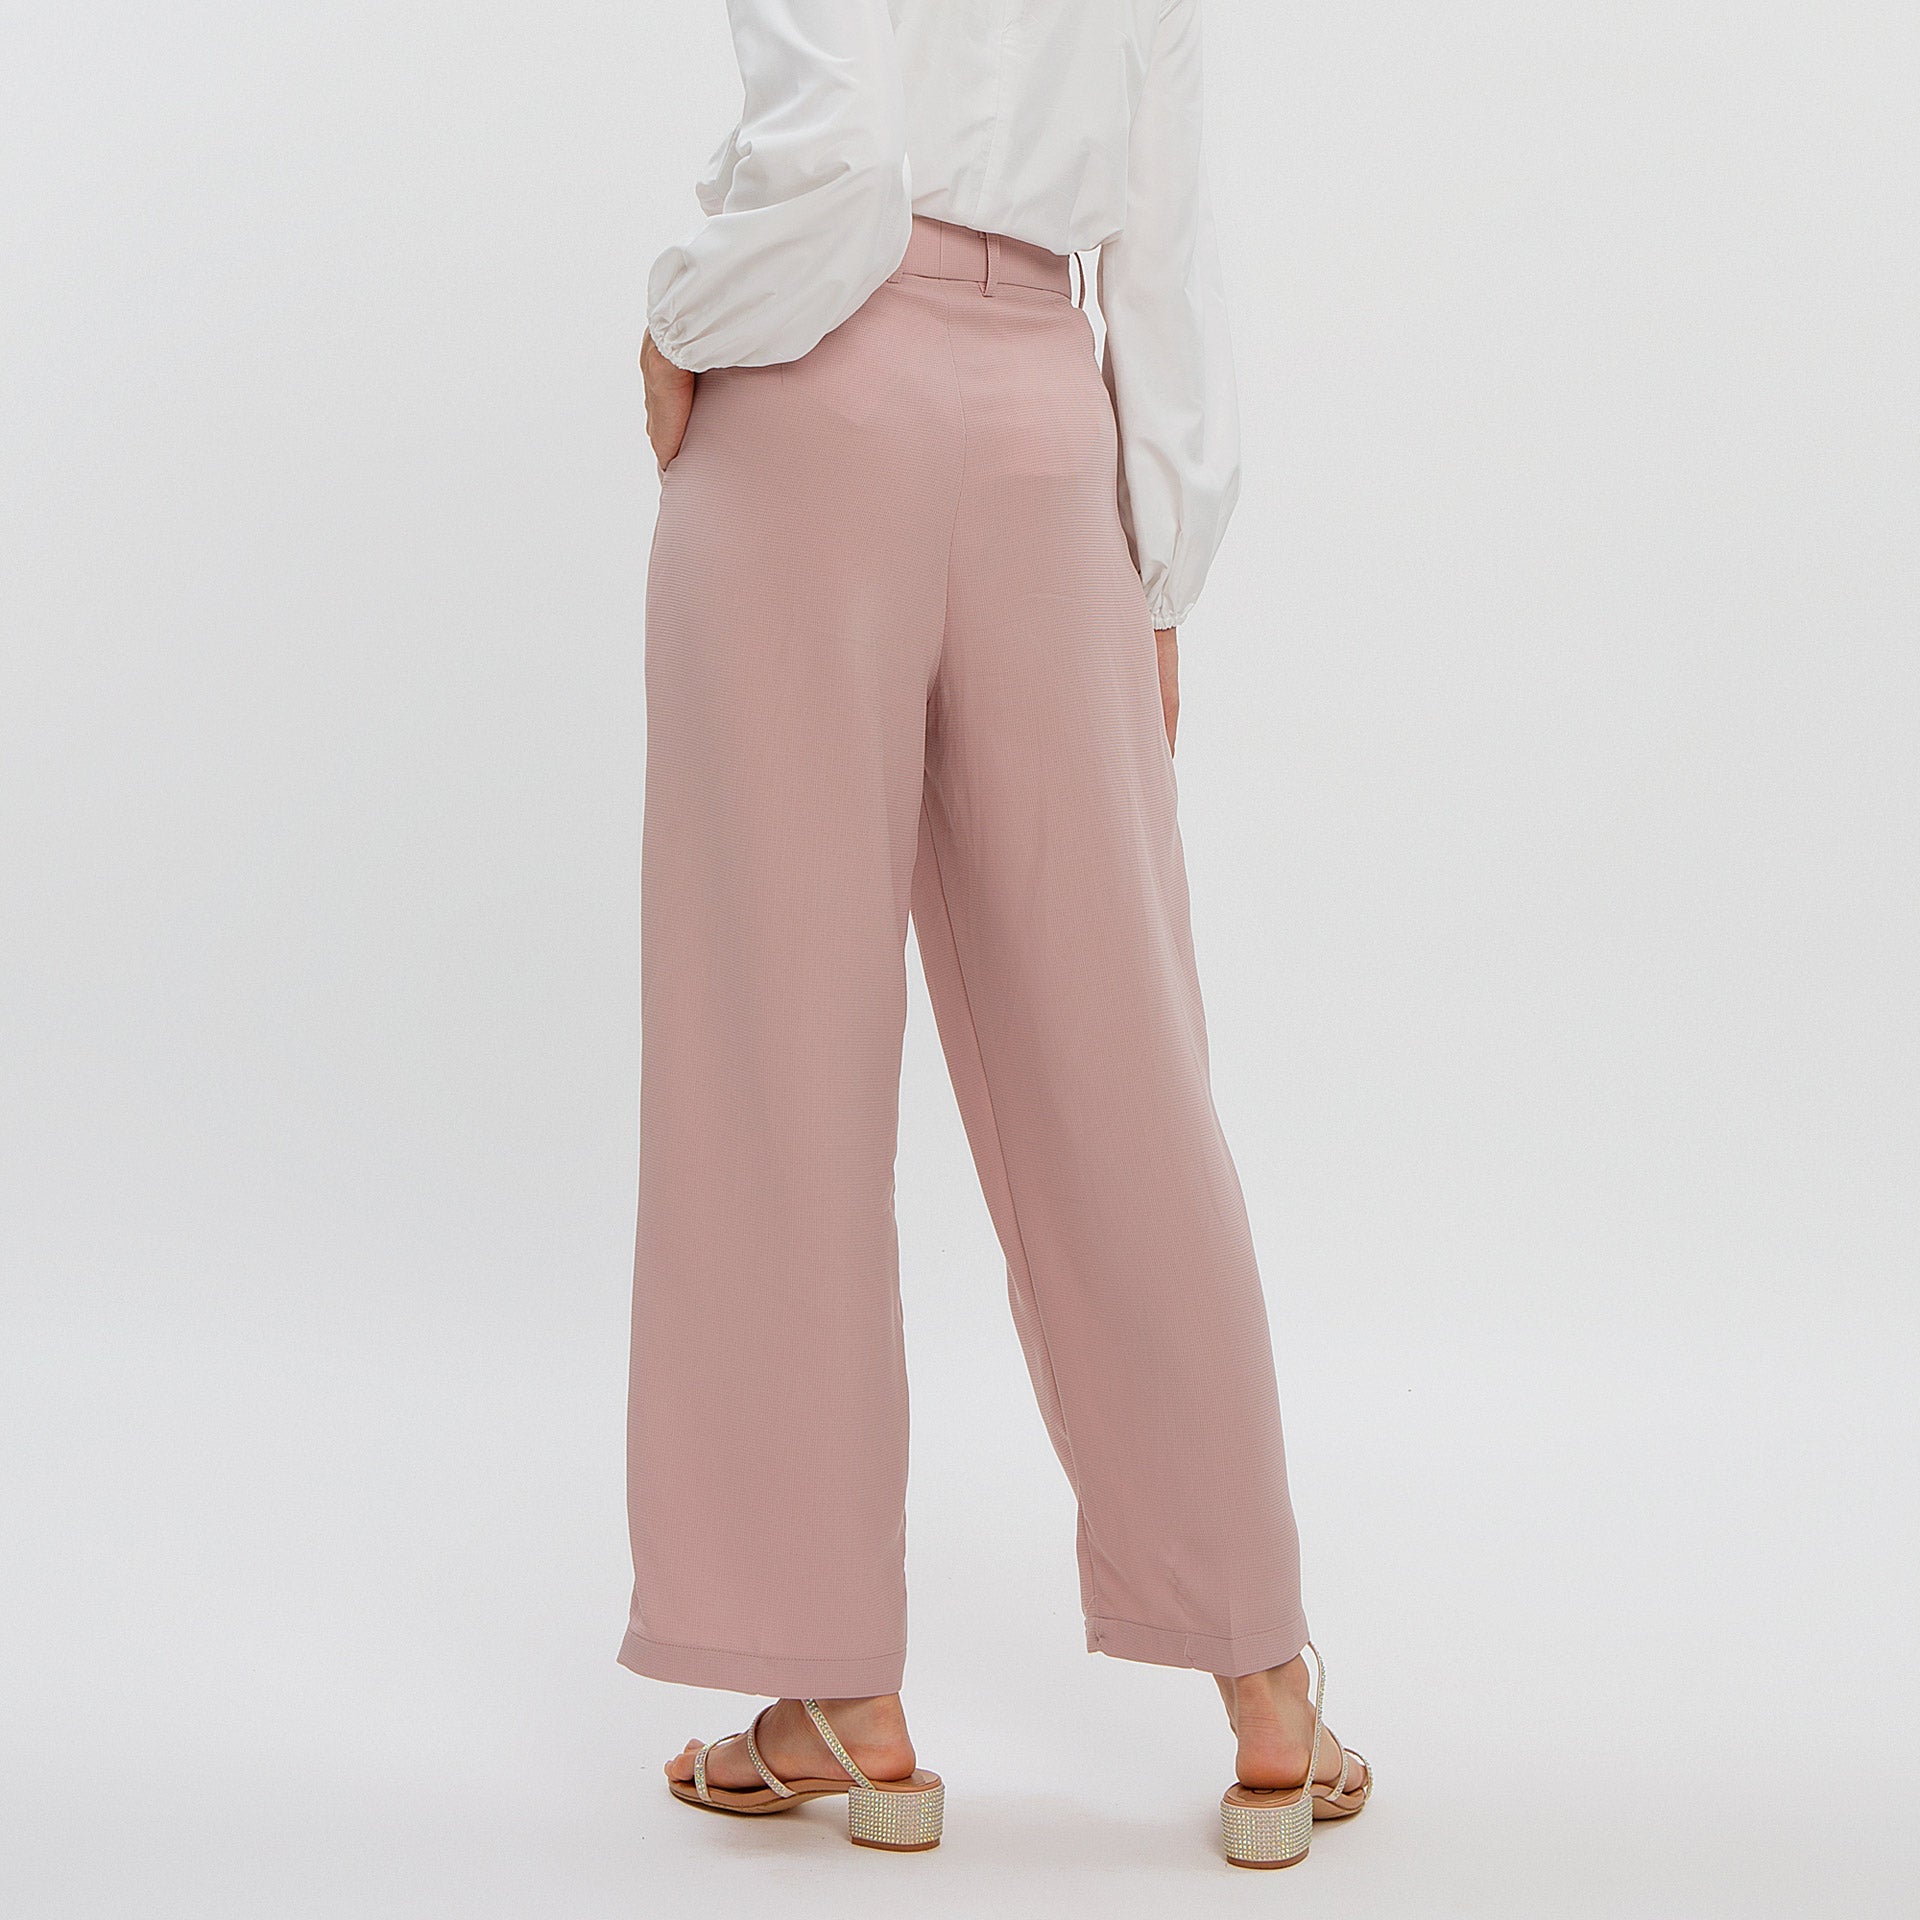 Ishana Pink Pants | HijabChic